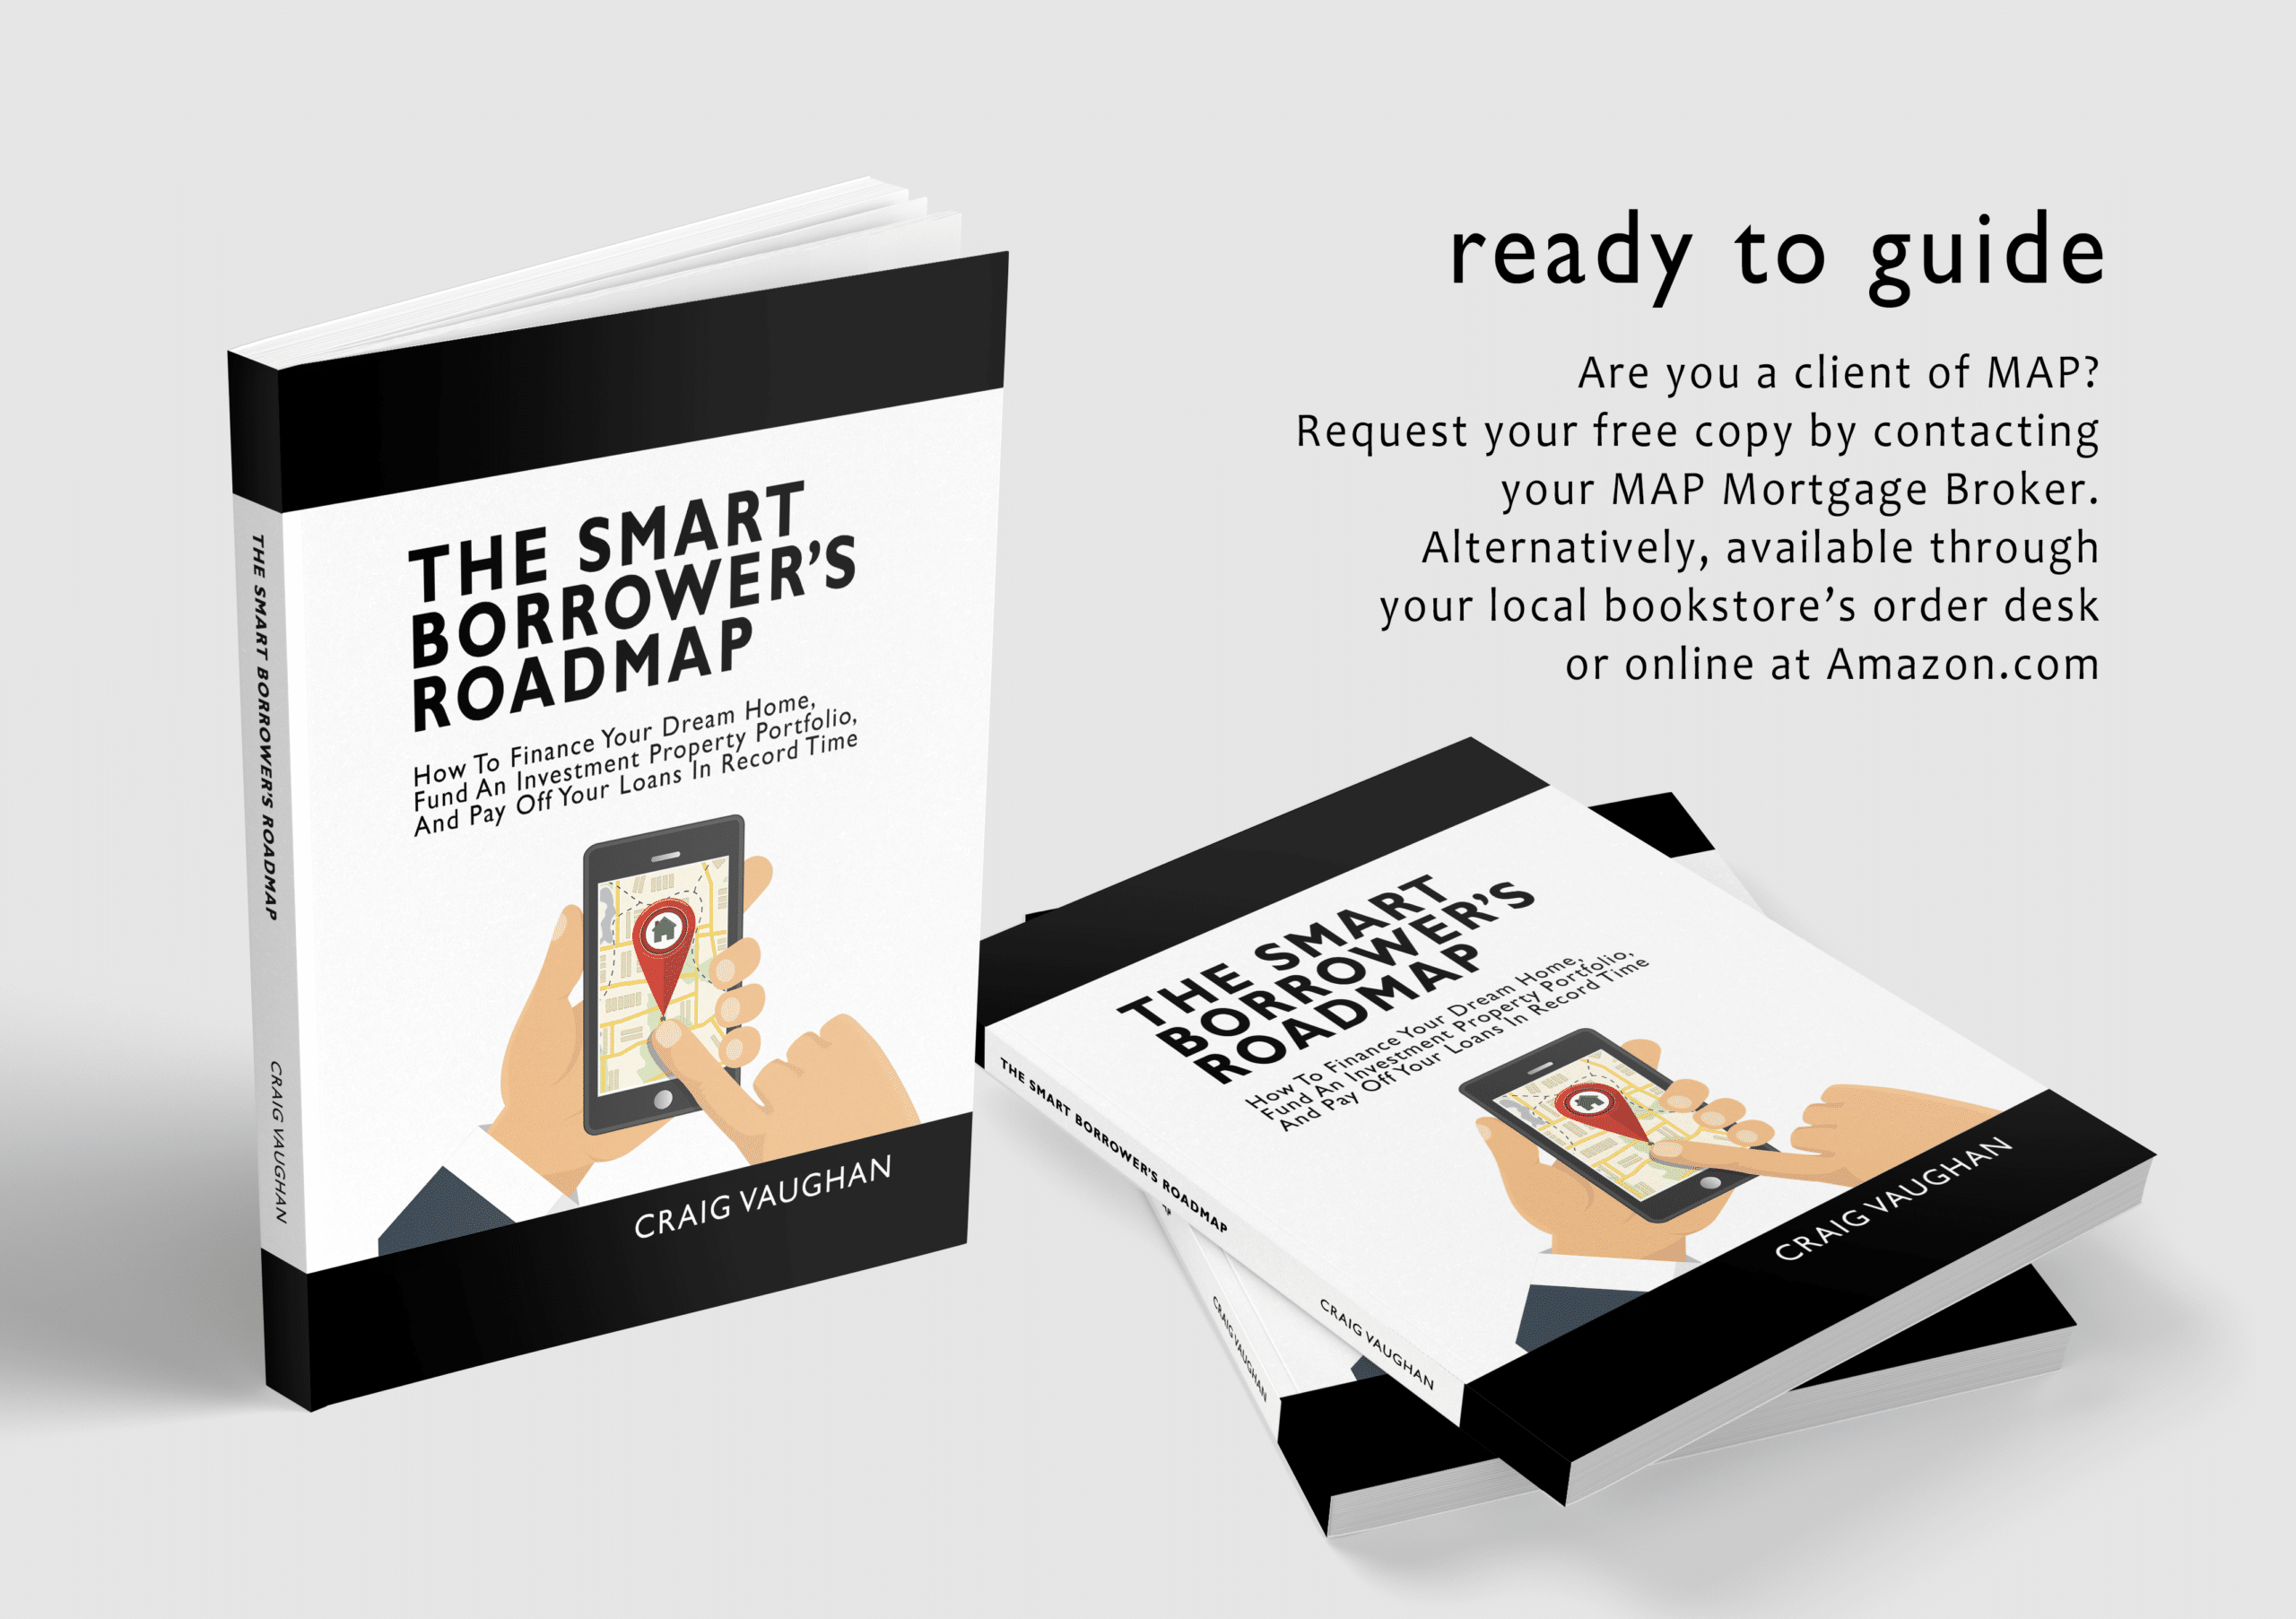 Book Smart Borrower's Roadmap